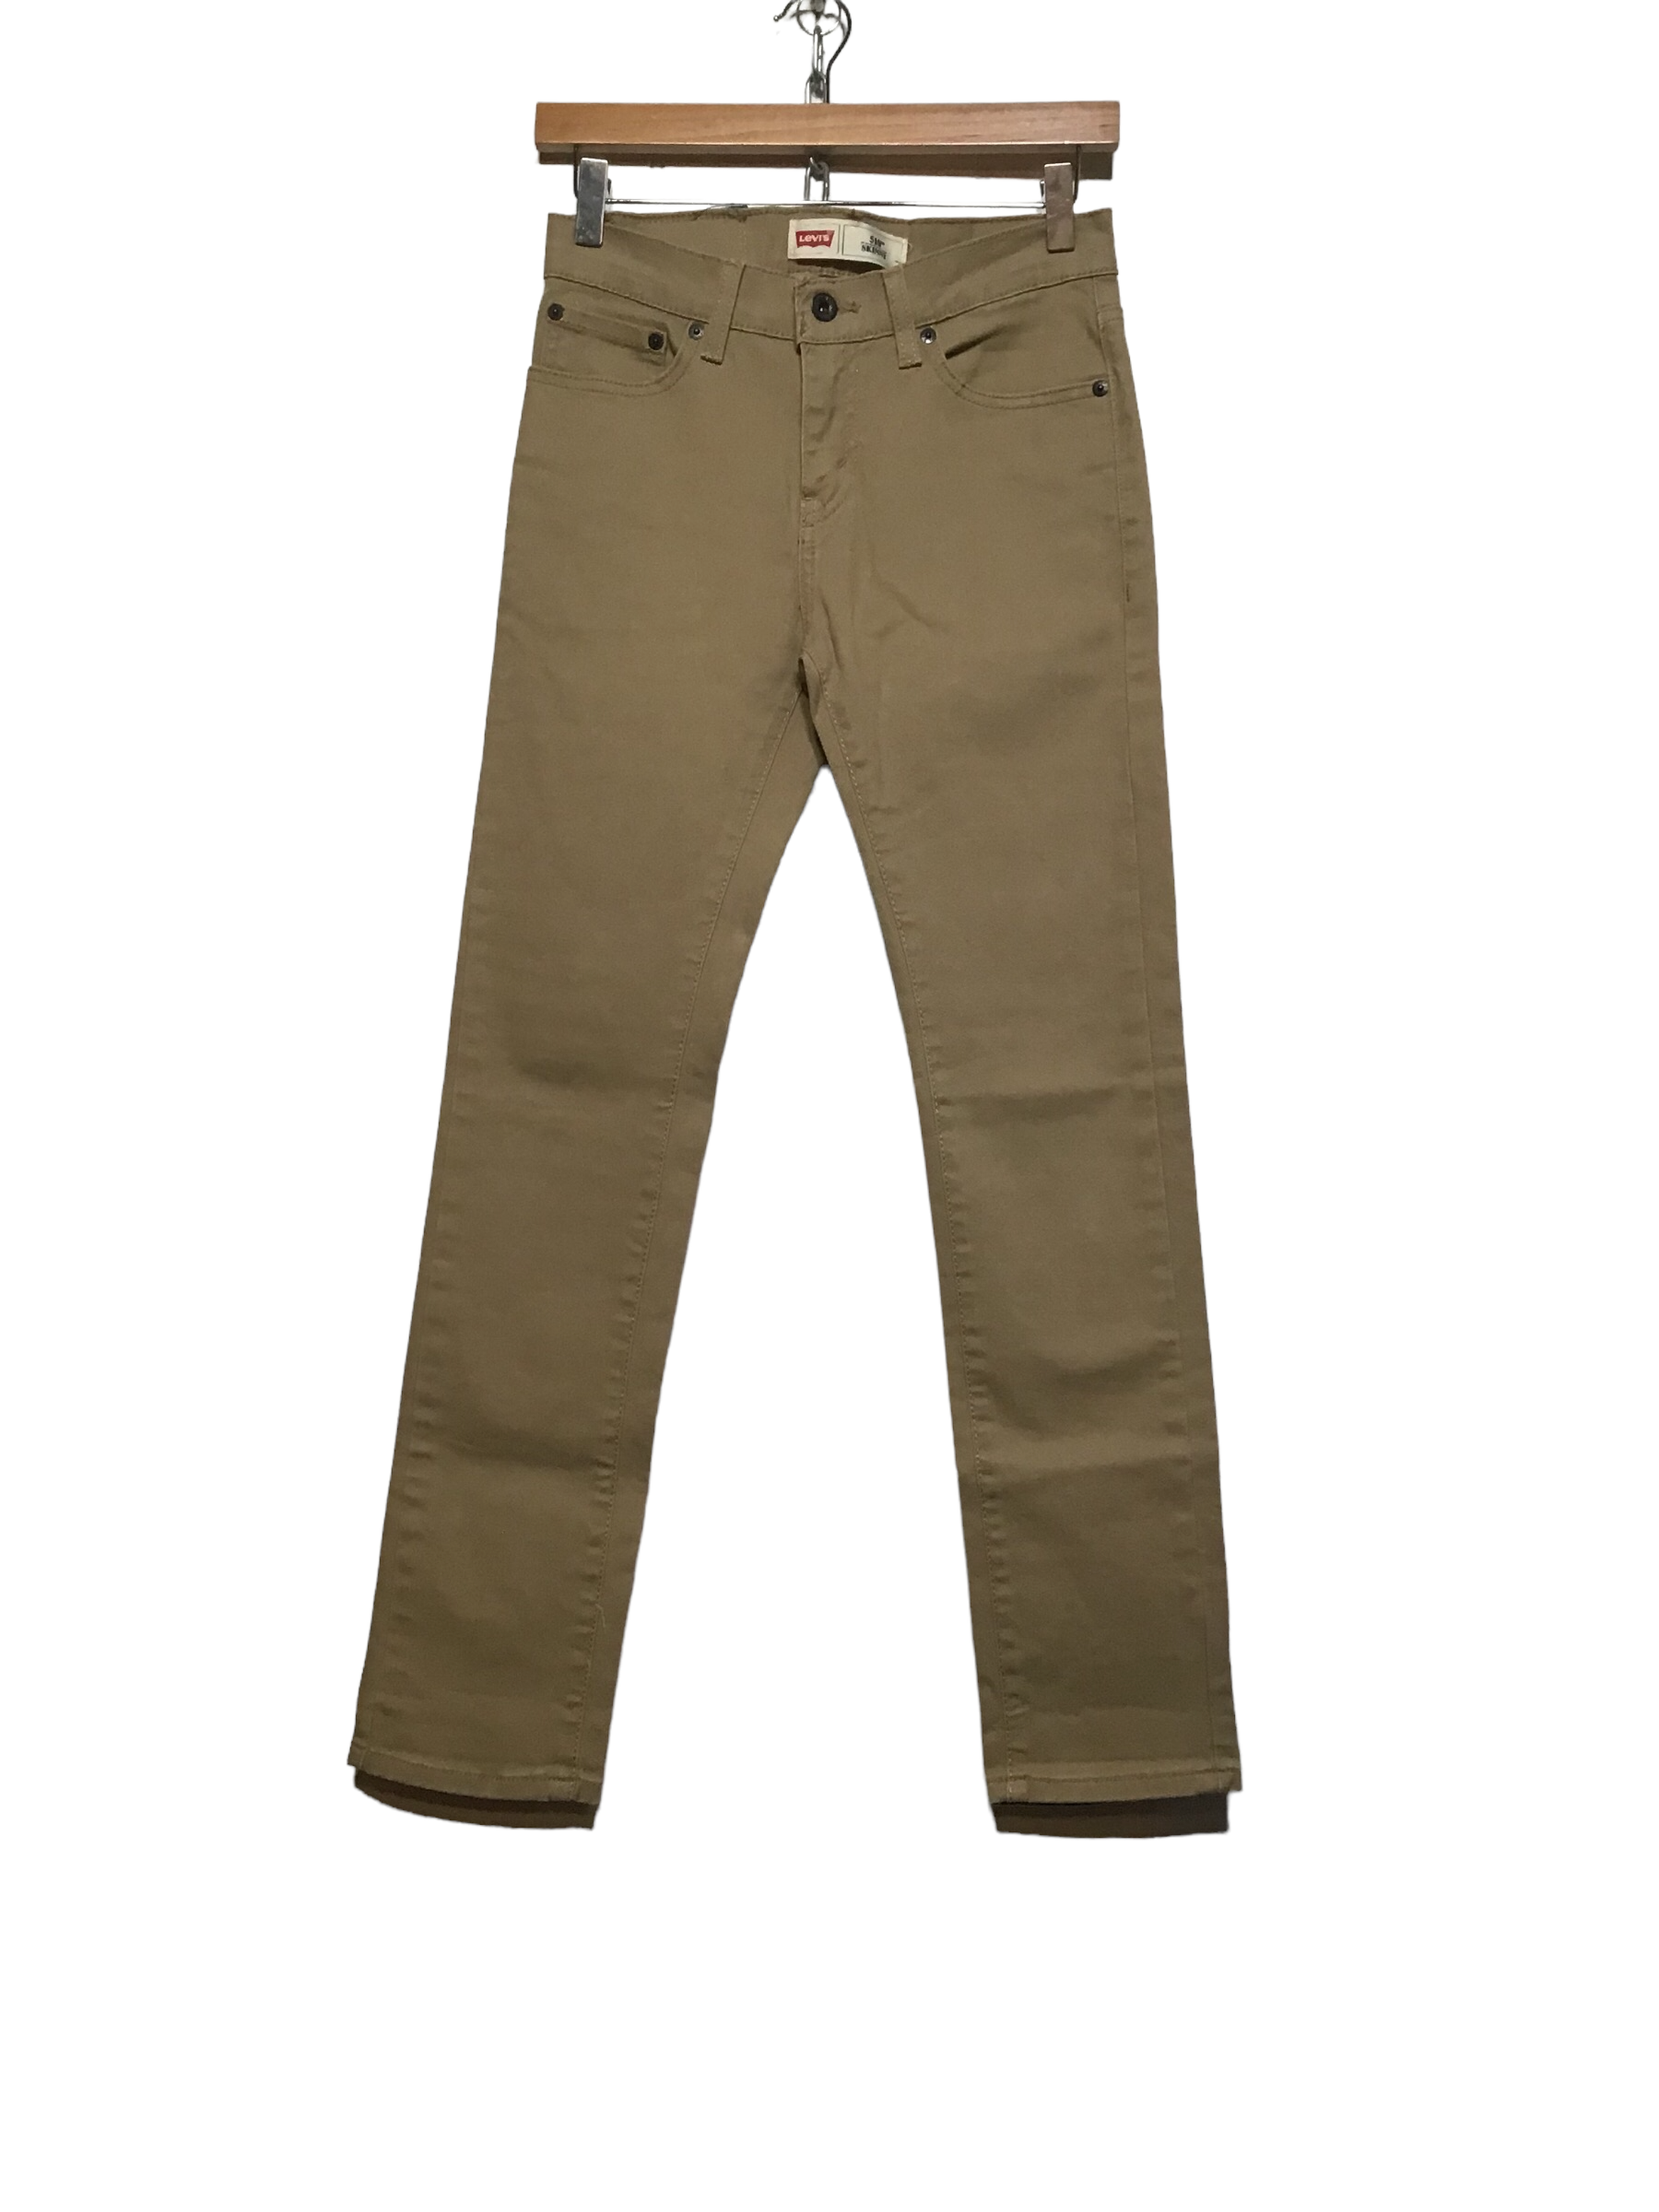 Levi 501 Beige Skinny Jeans (27X27) – Loft 68 Vintage